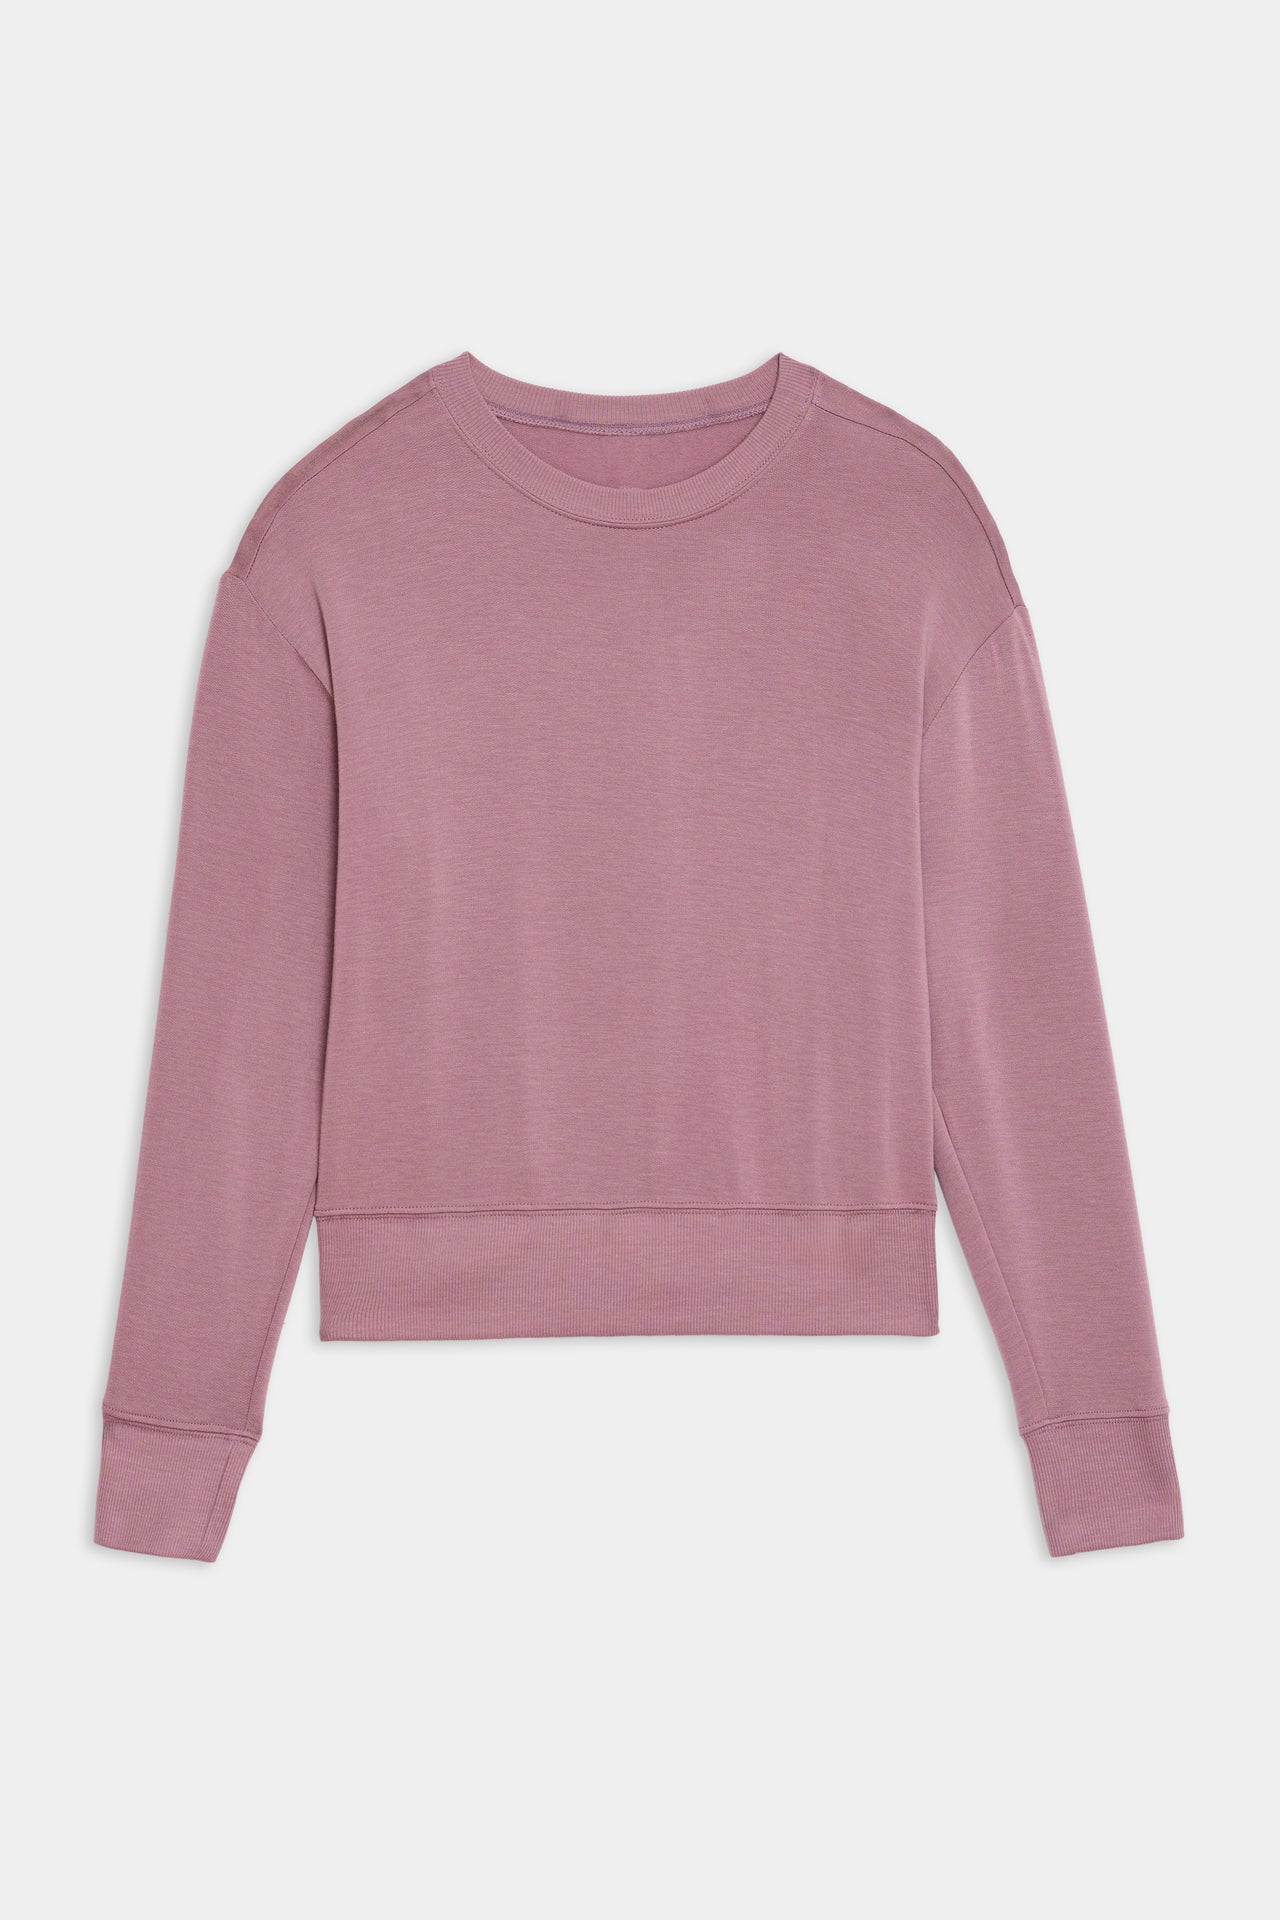 Front flat view of light pink crewneck sweatshirt